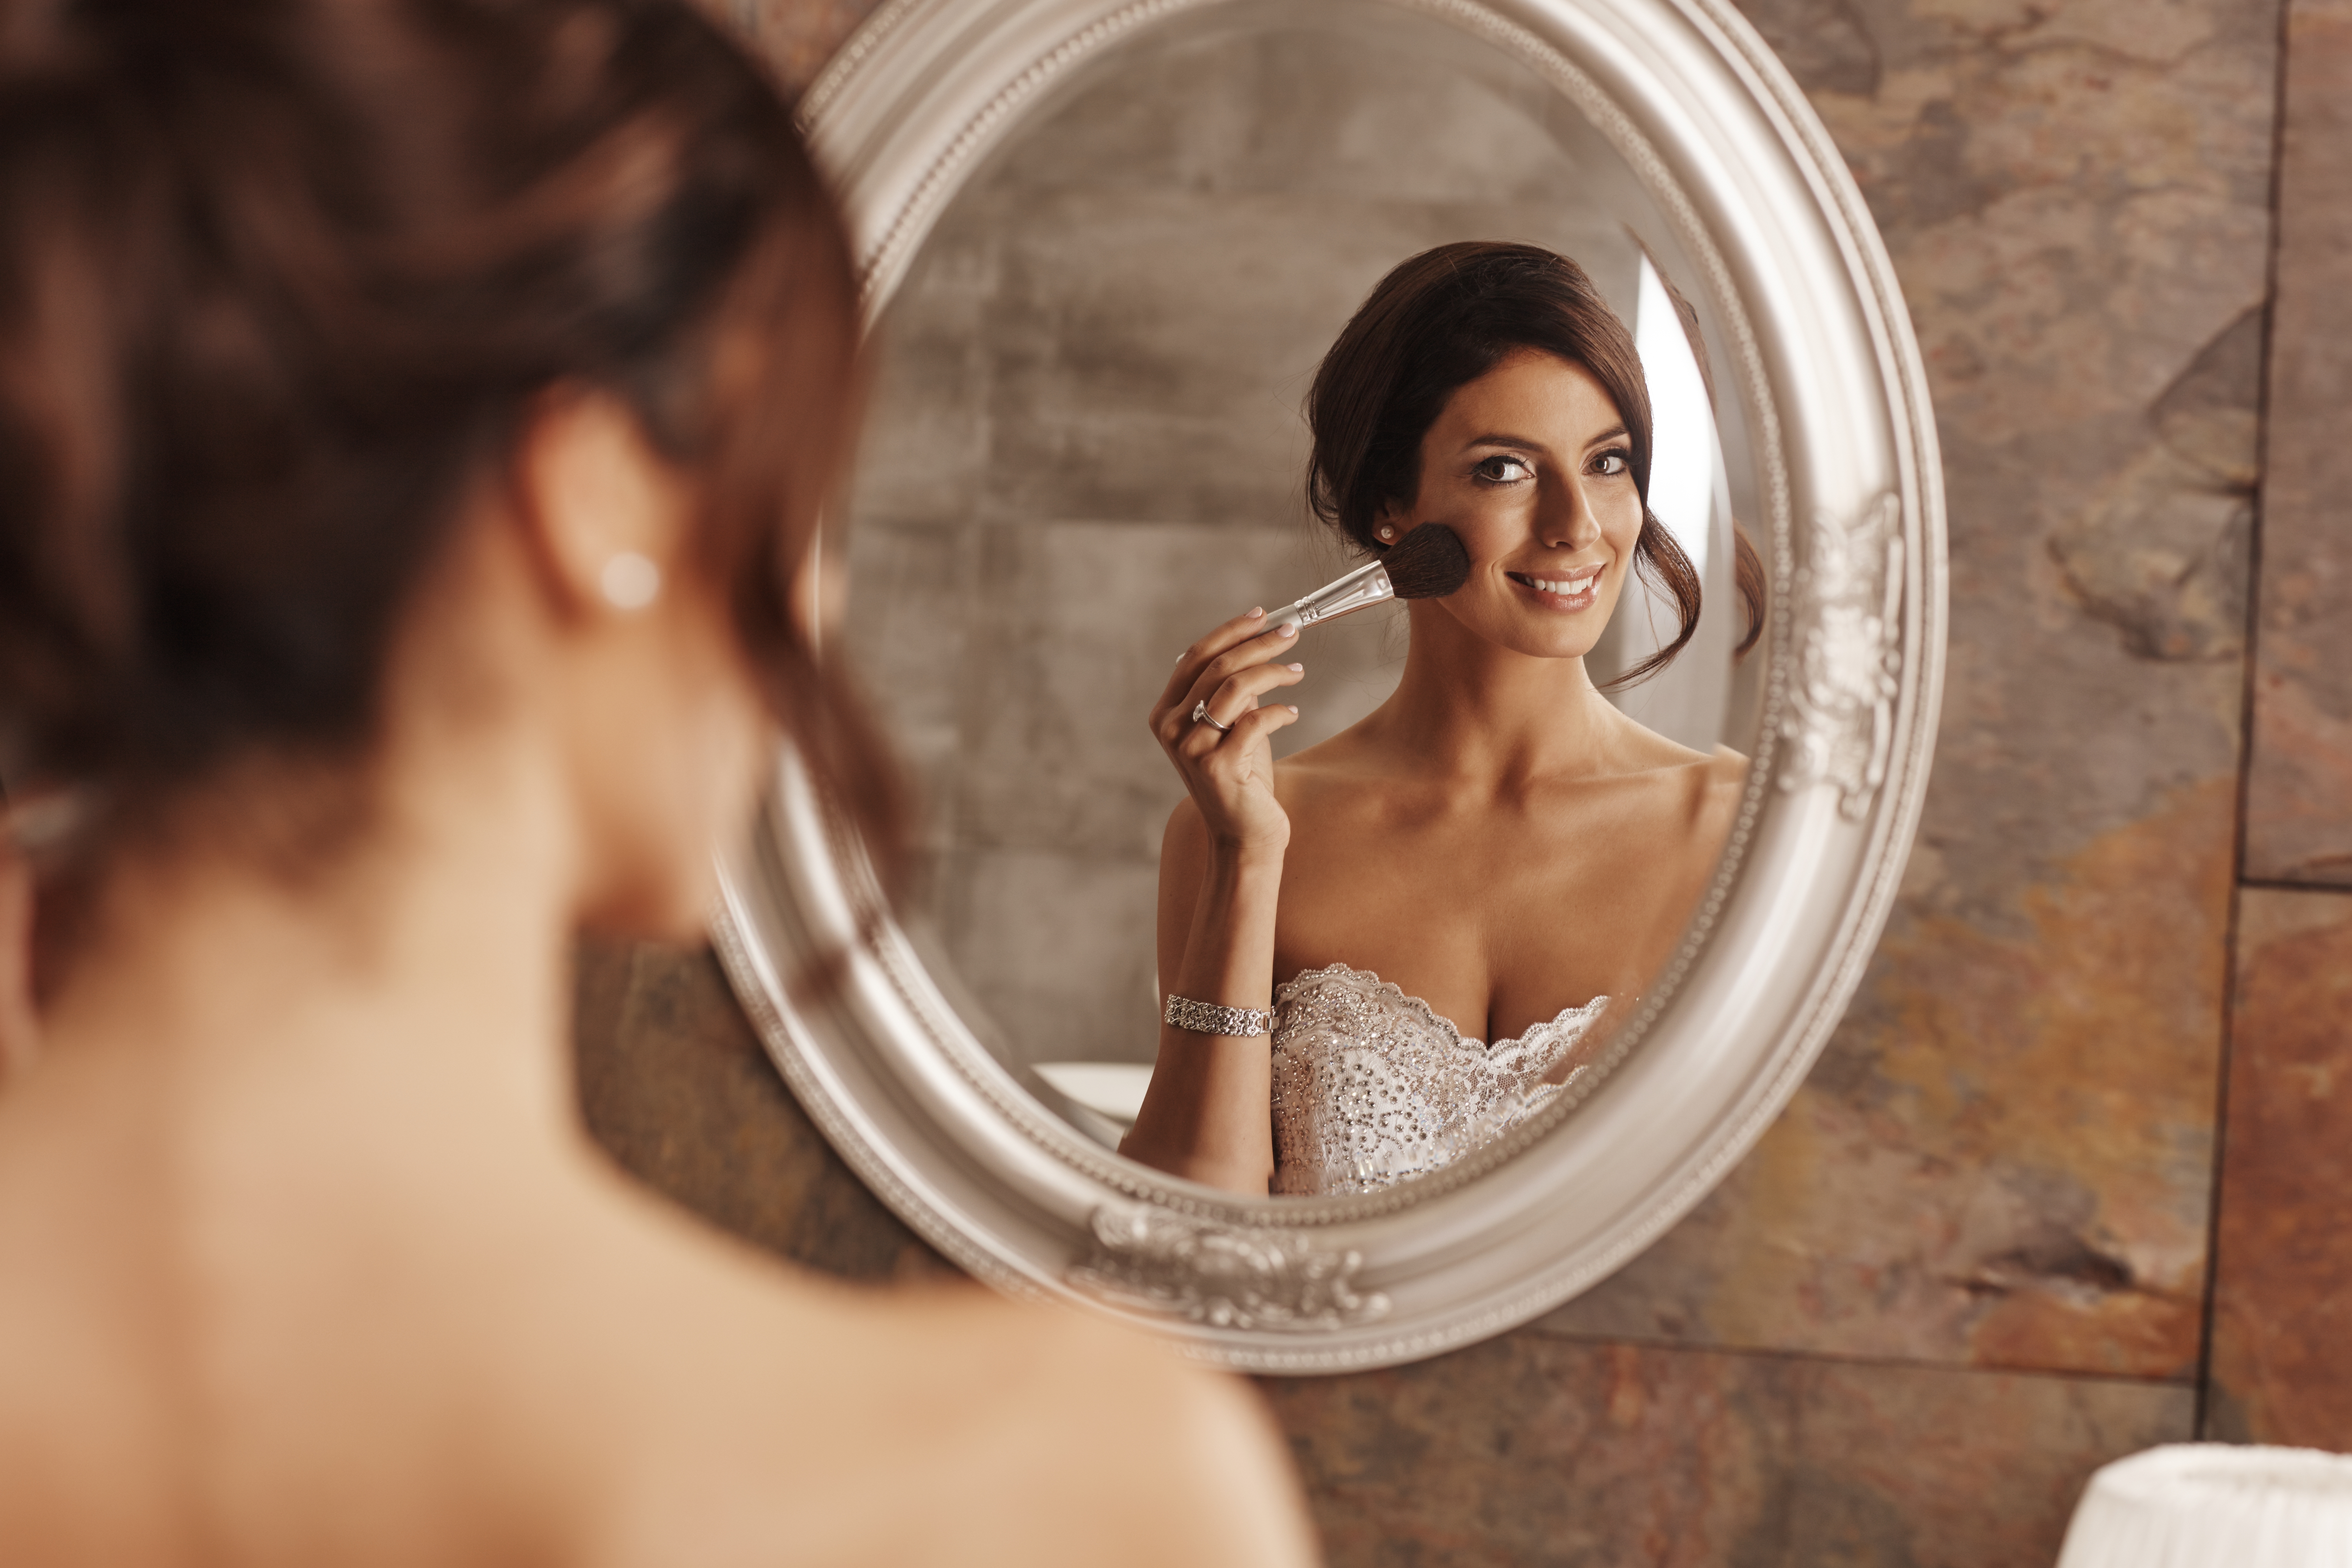 A young bride applying makeup | Source: Shutterstock